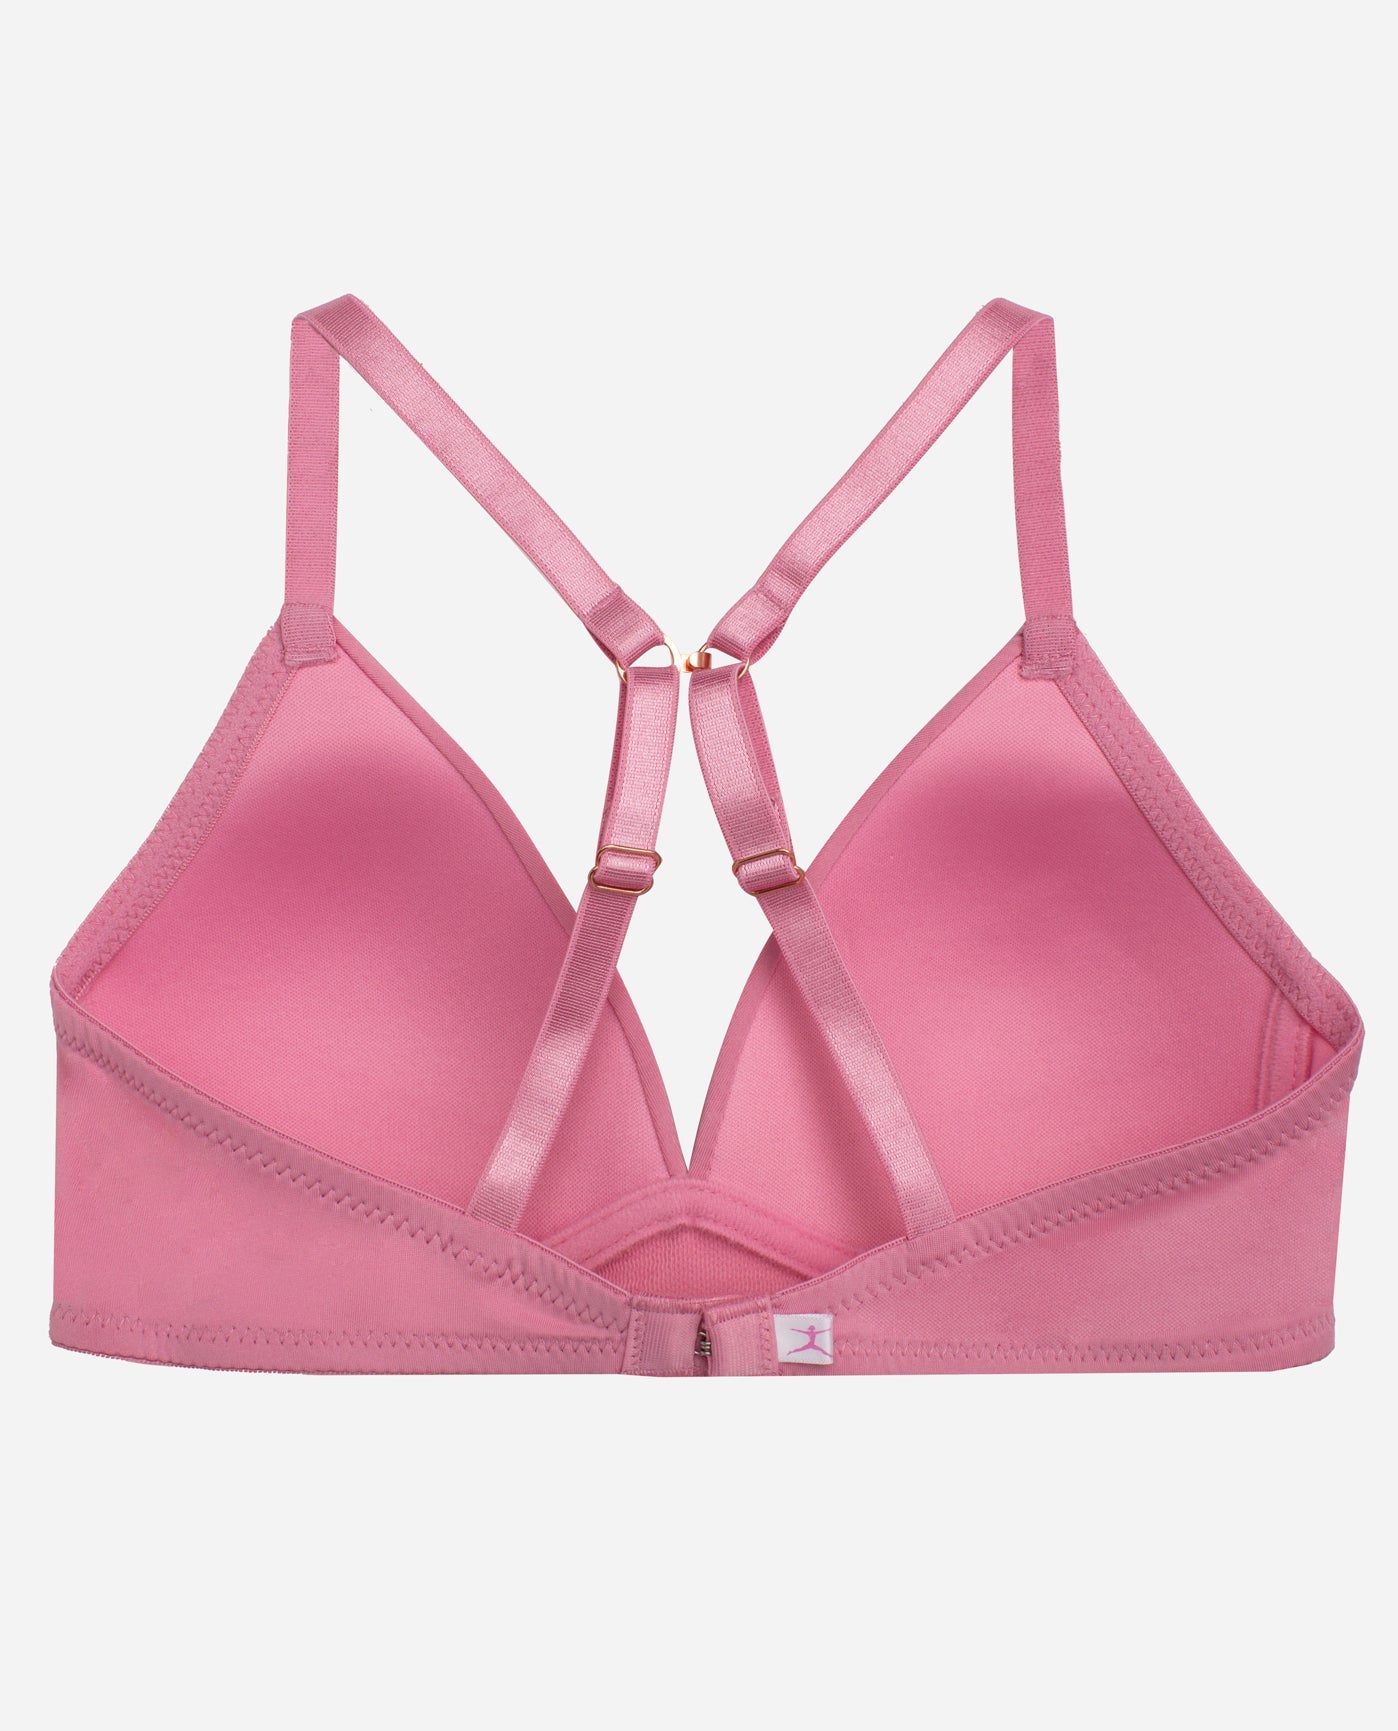 DSG Sports Bra Pink Size M - $18 (28% Off Retail) - From Ali